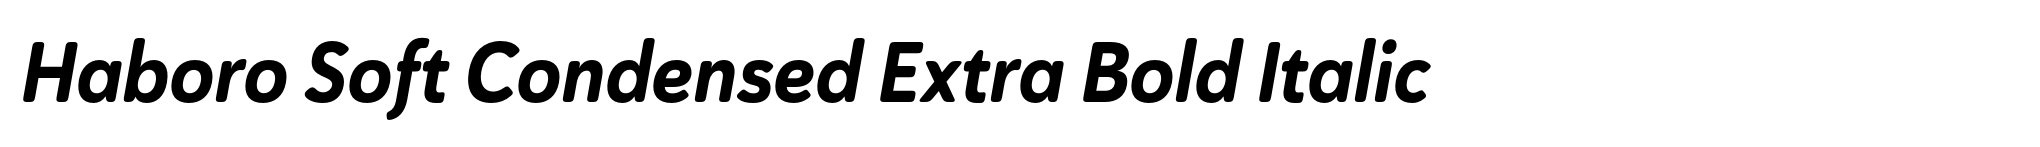 Haboro Soft Condensed Extra Bold Italic image